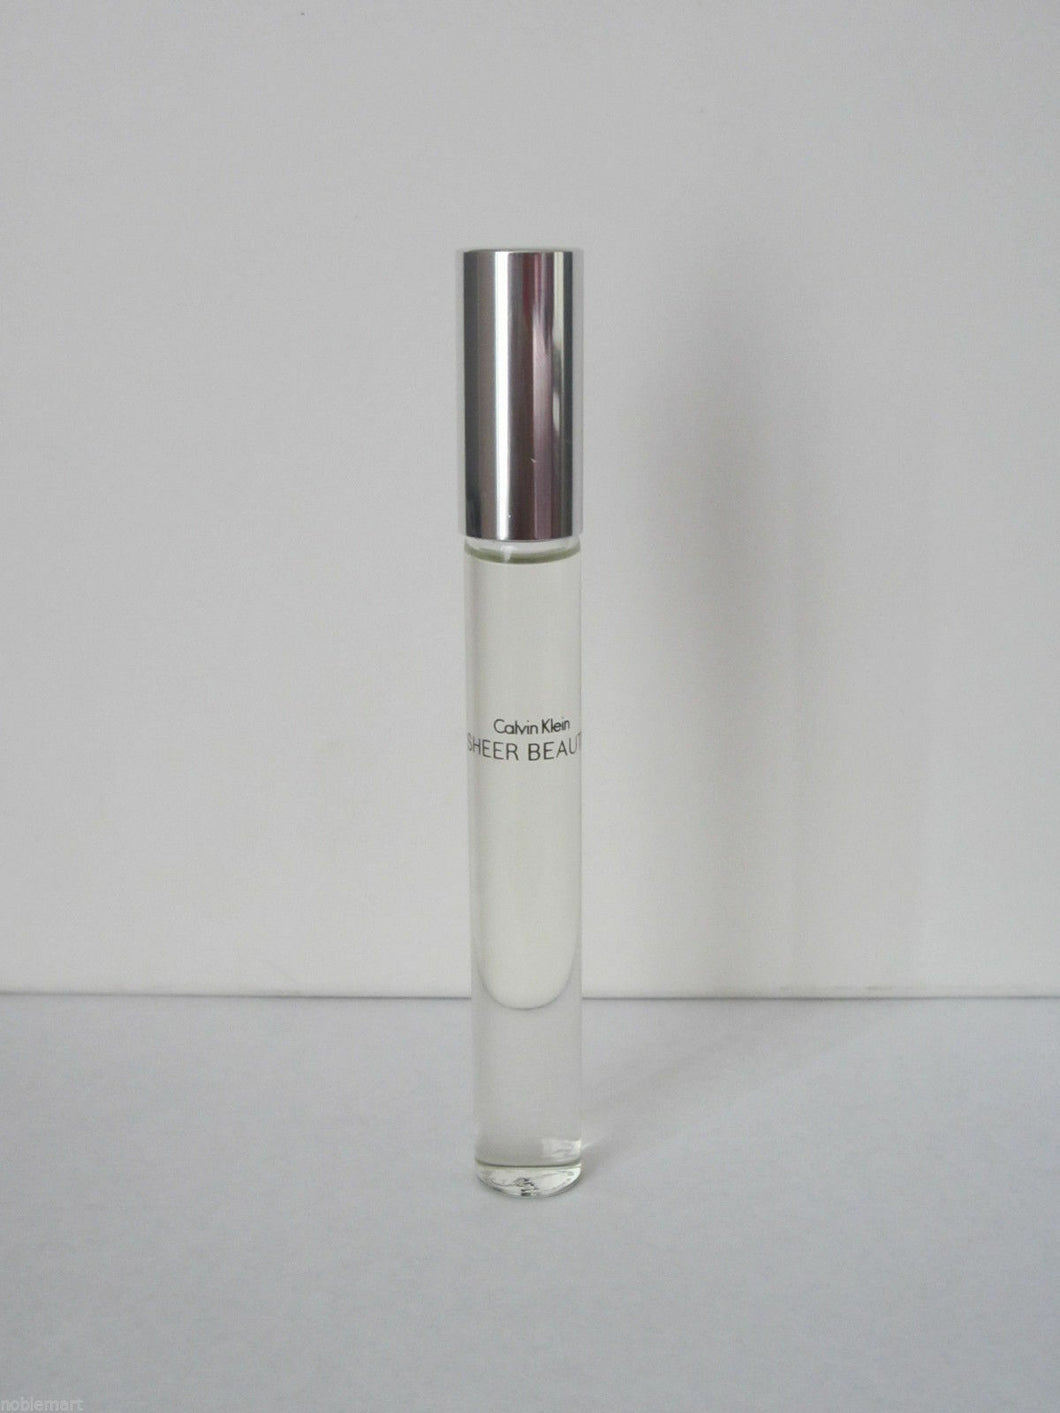 Calvin Klein Beauty Sheer Perfume EDT Rollerball  0.33 Oz/10 Ml No Box